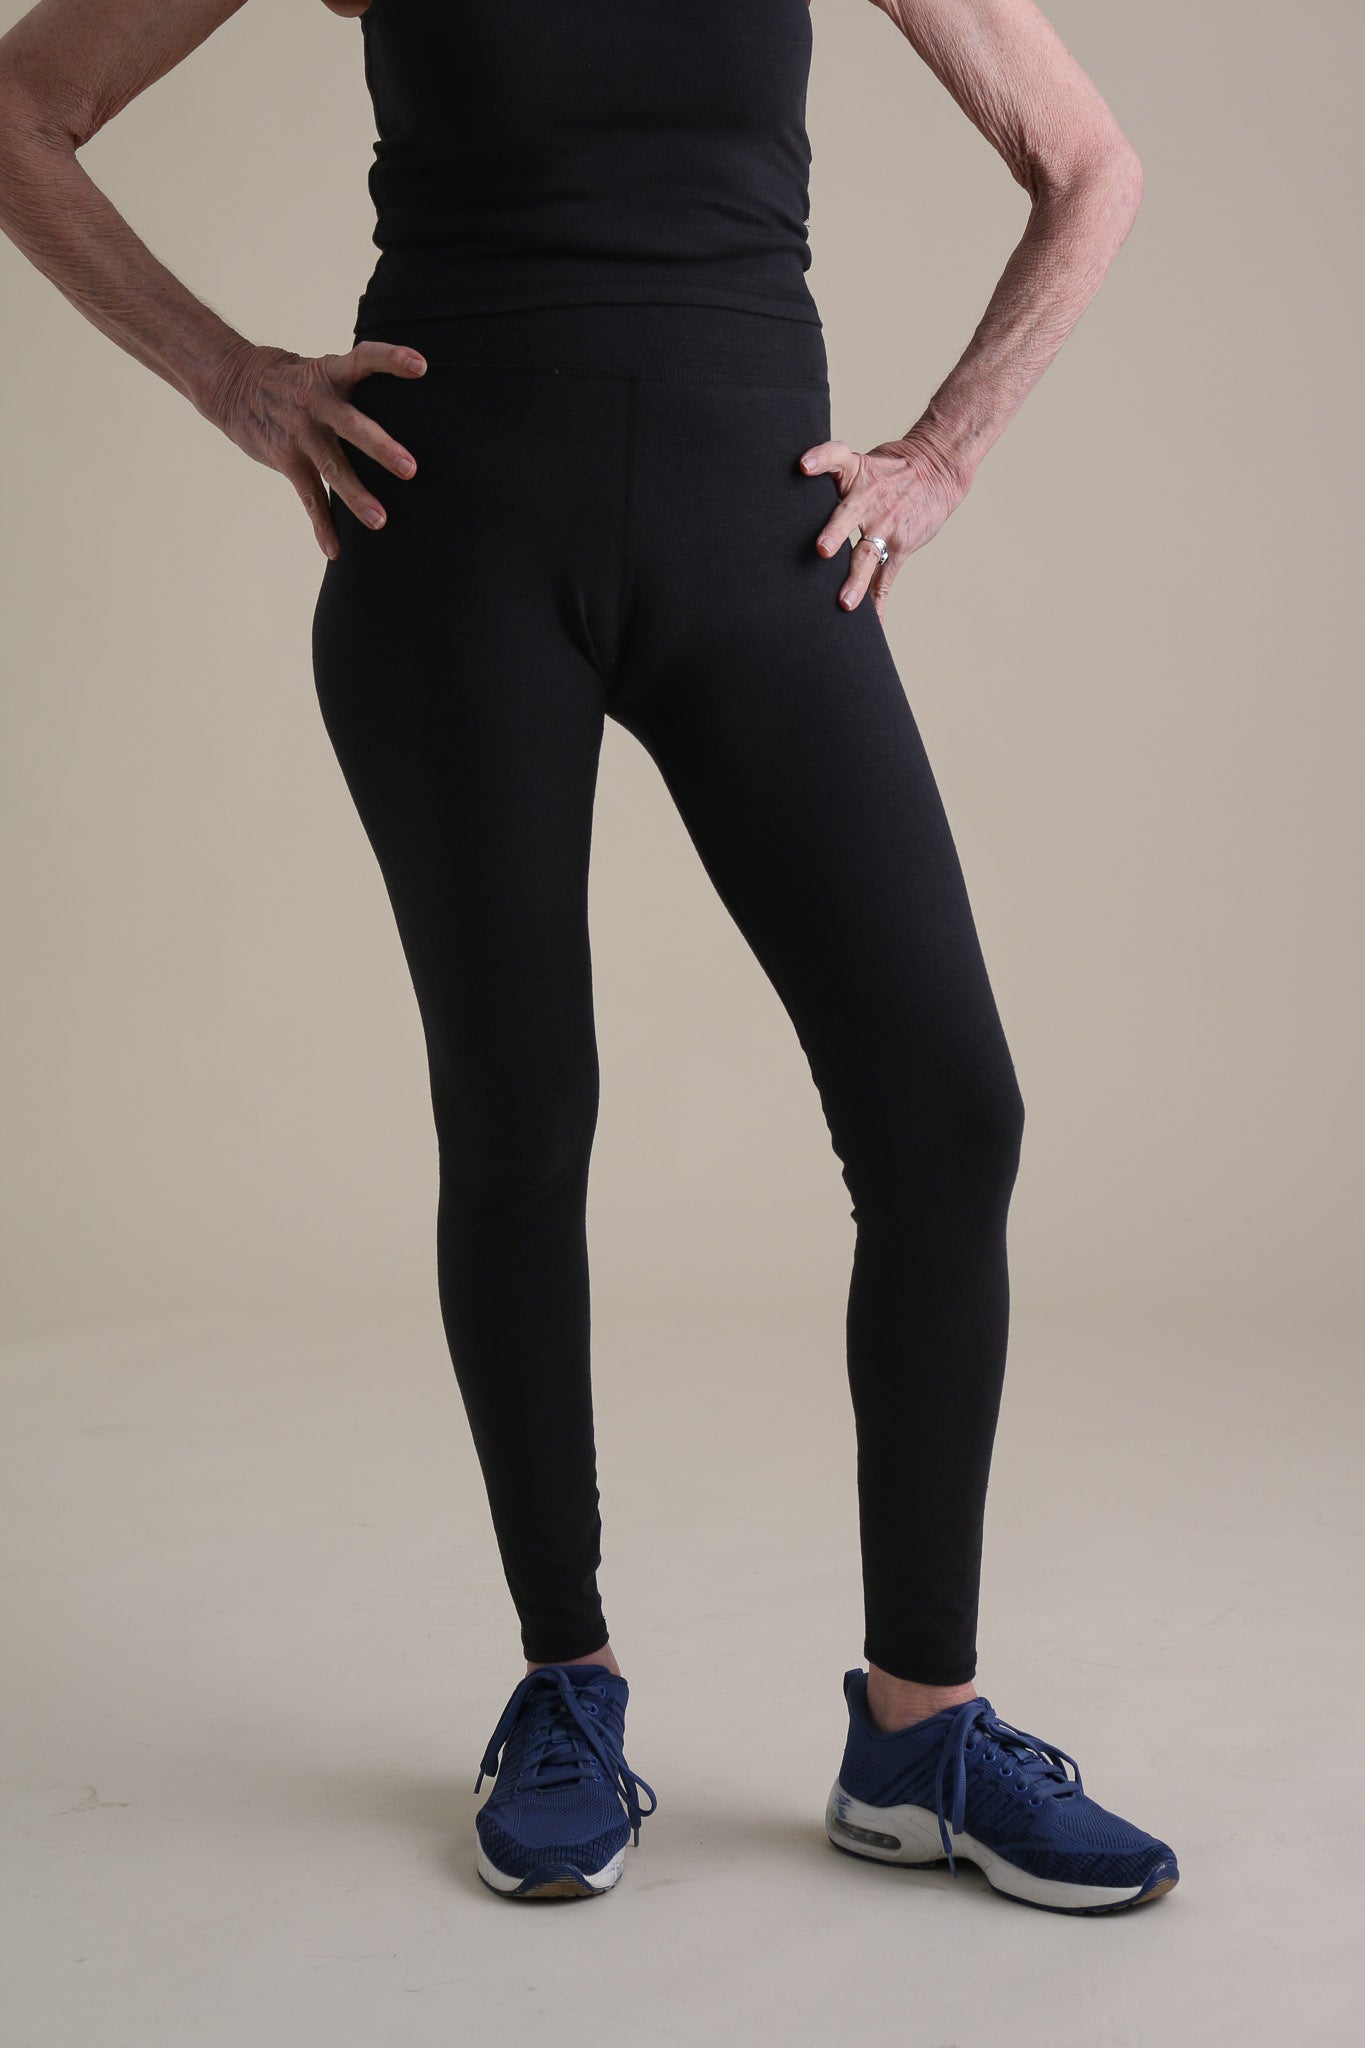 Tropical Orchid Leggings Activewear Set Black Designer Yoga Pants